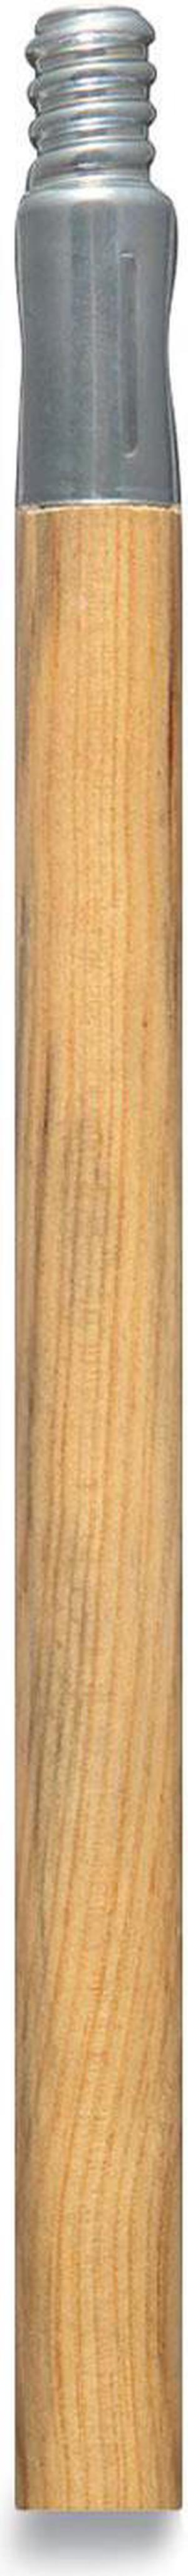 Coastwide Push Broom Handle w/Metal Thread, 60" Wood Handle, Each (CWZ24420789)